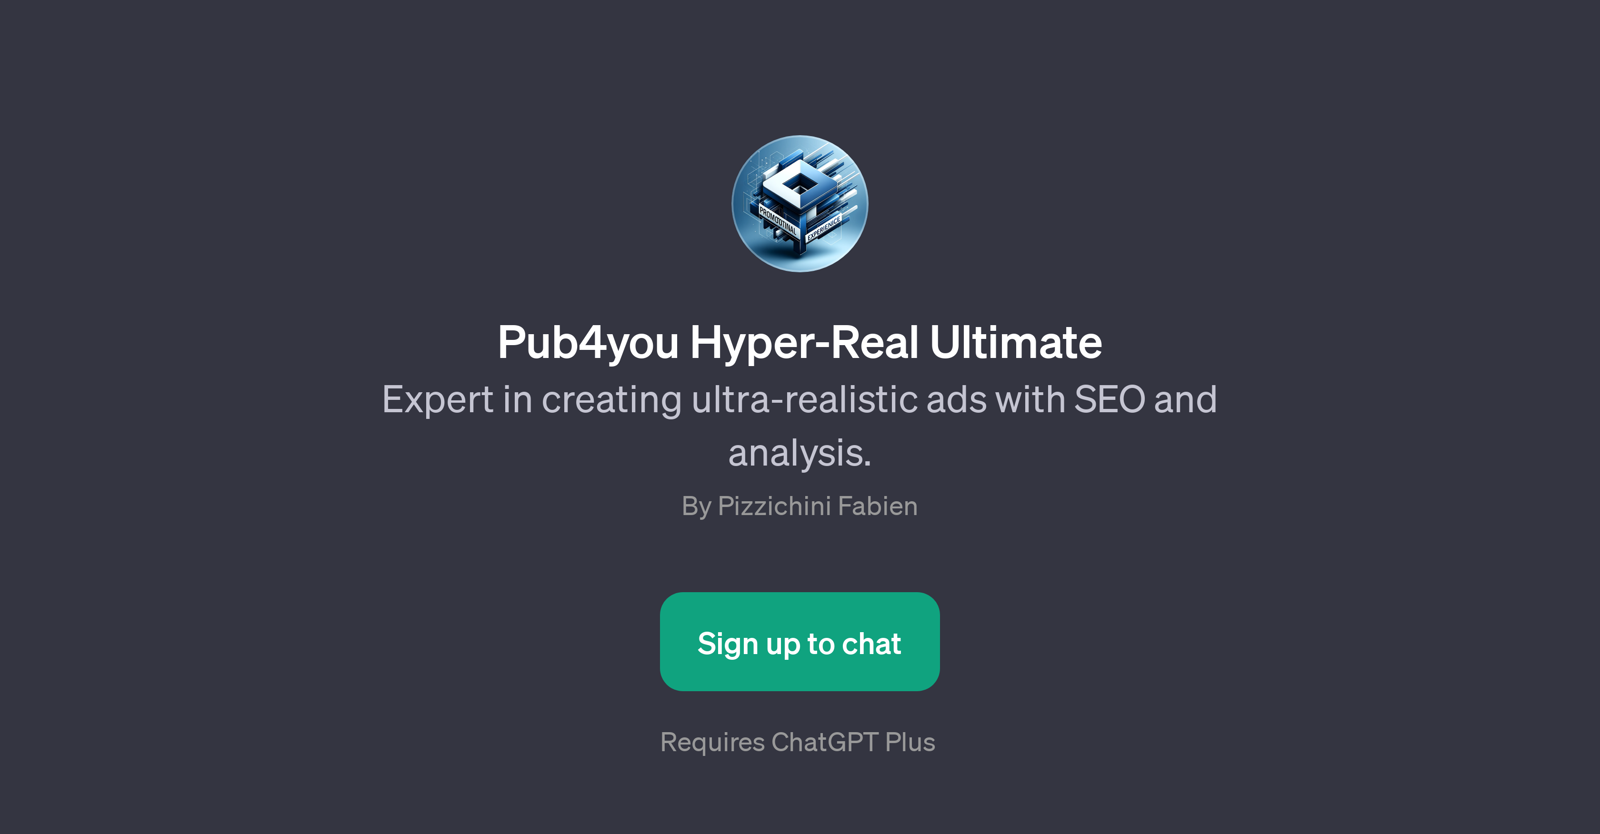 Pub4you Hyper-Real Ultimate website